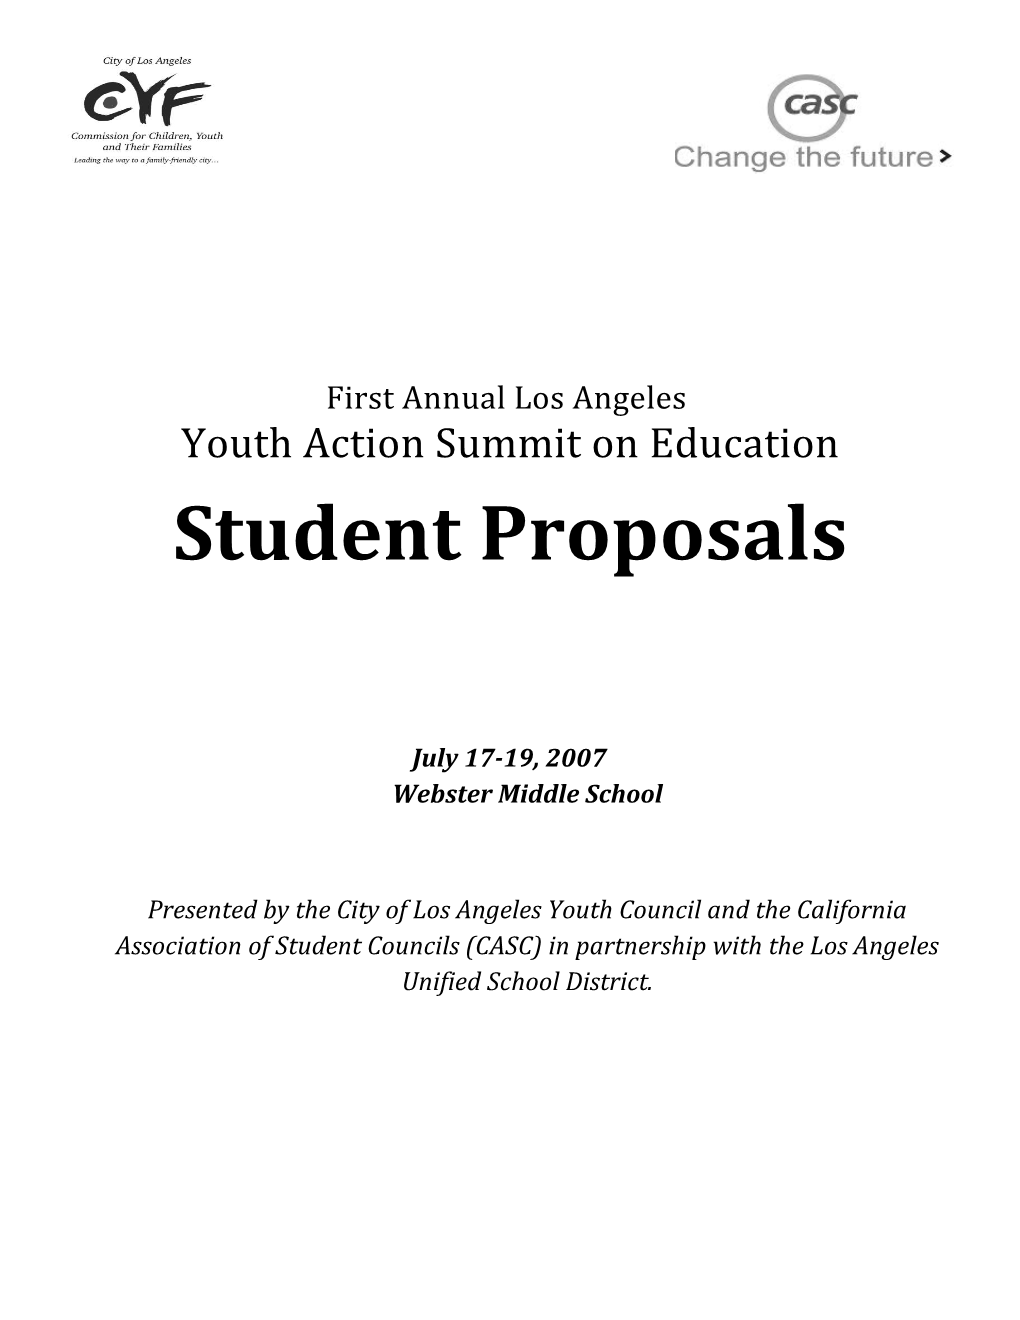 LA City Student Advisory Board on Education